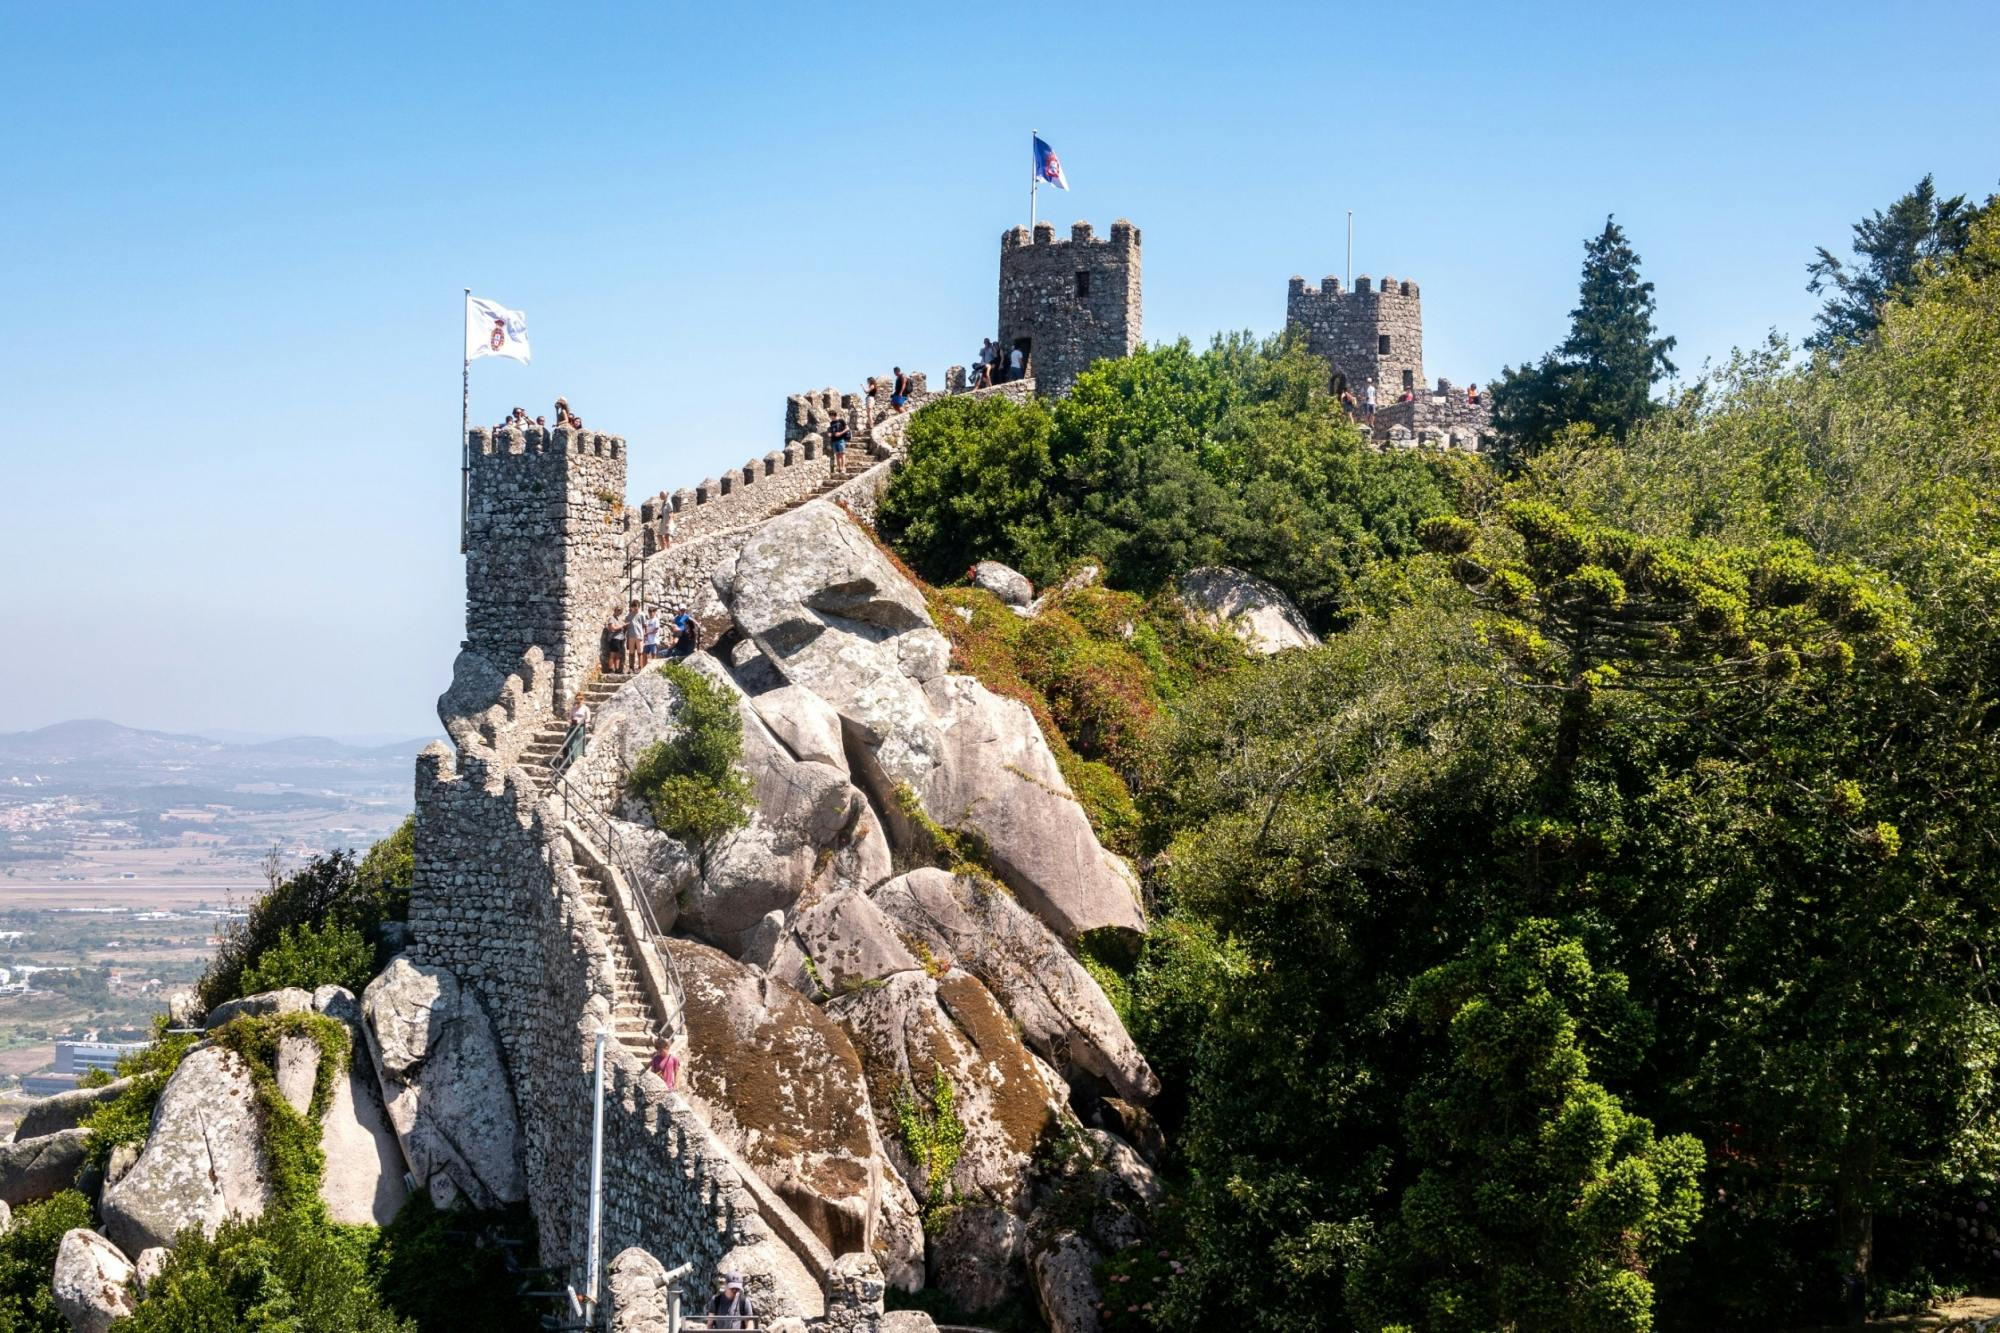 Moorish Castle and Quinta da Regaleira e-tickets with Sintra self-guided audio tour